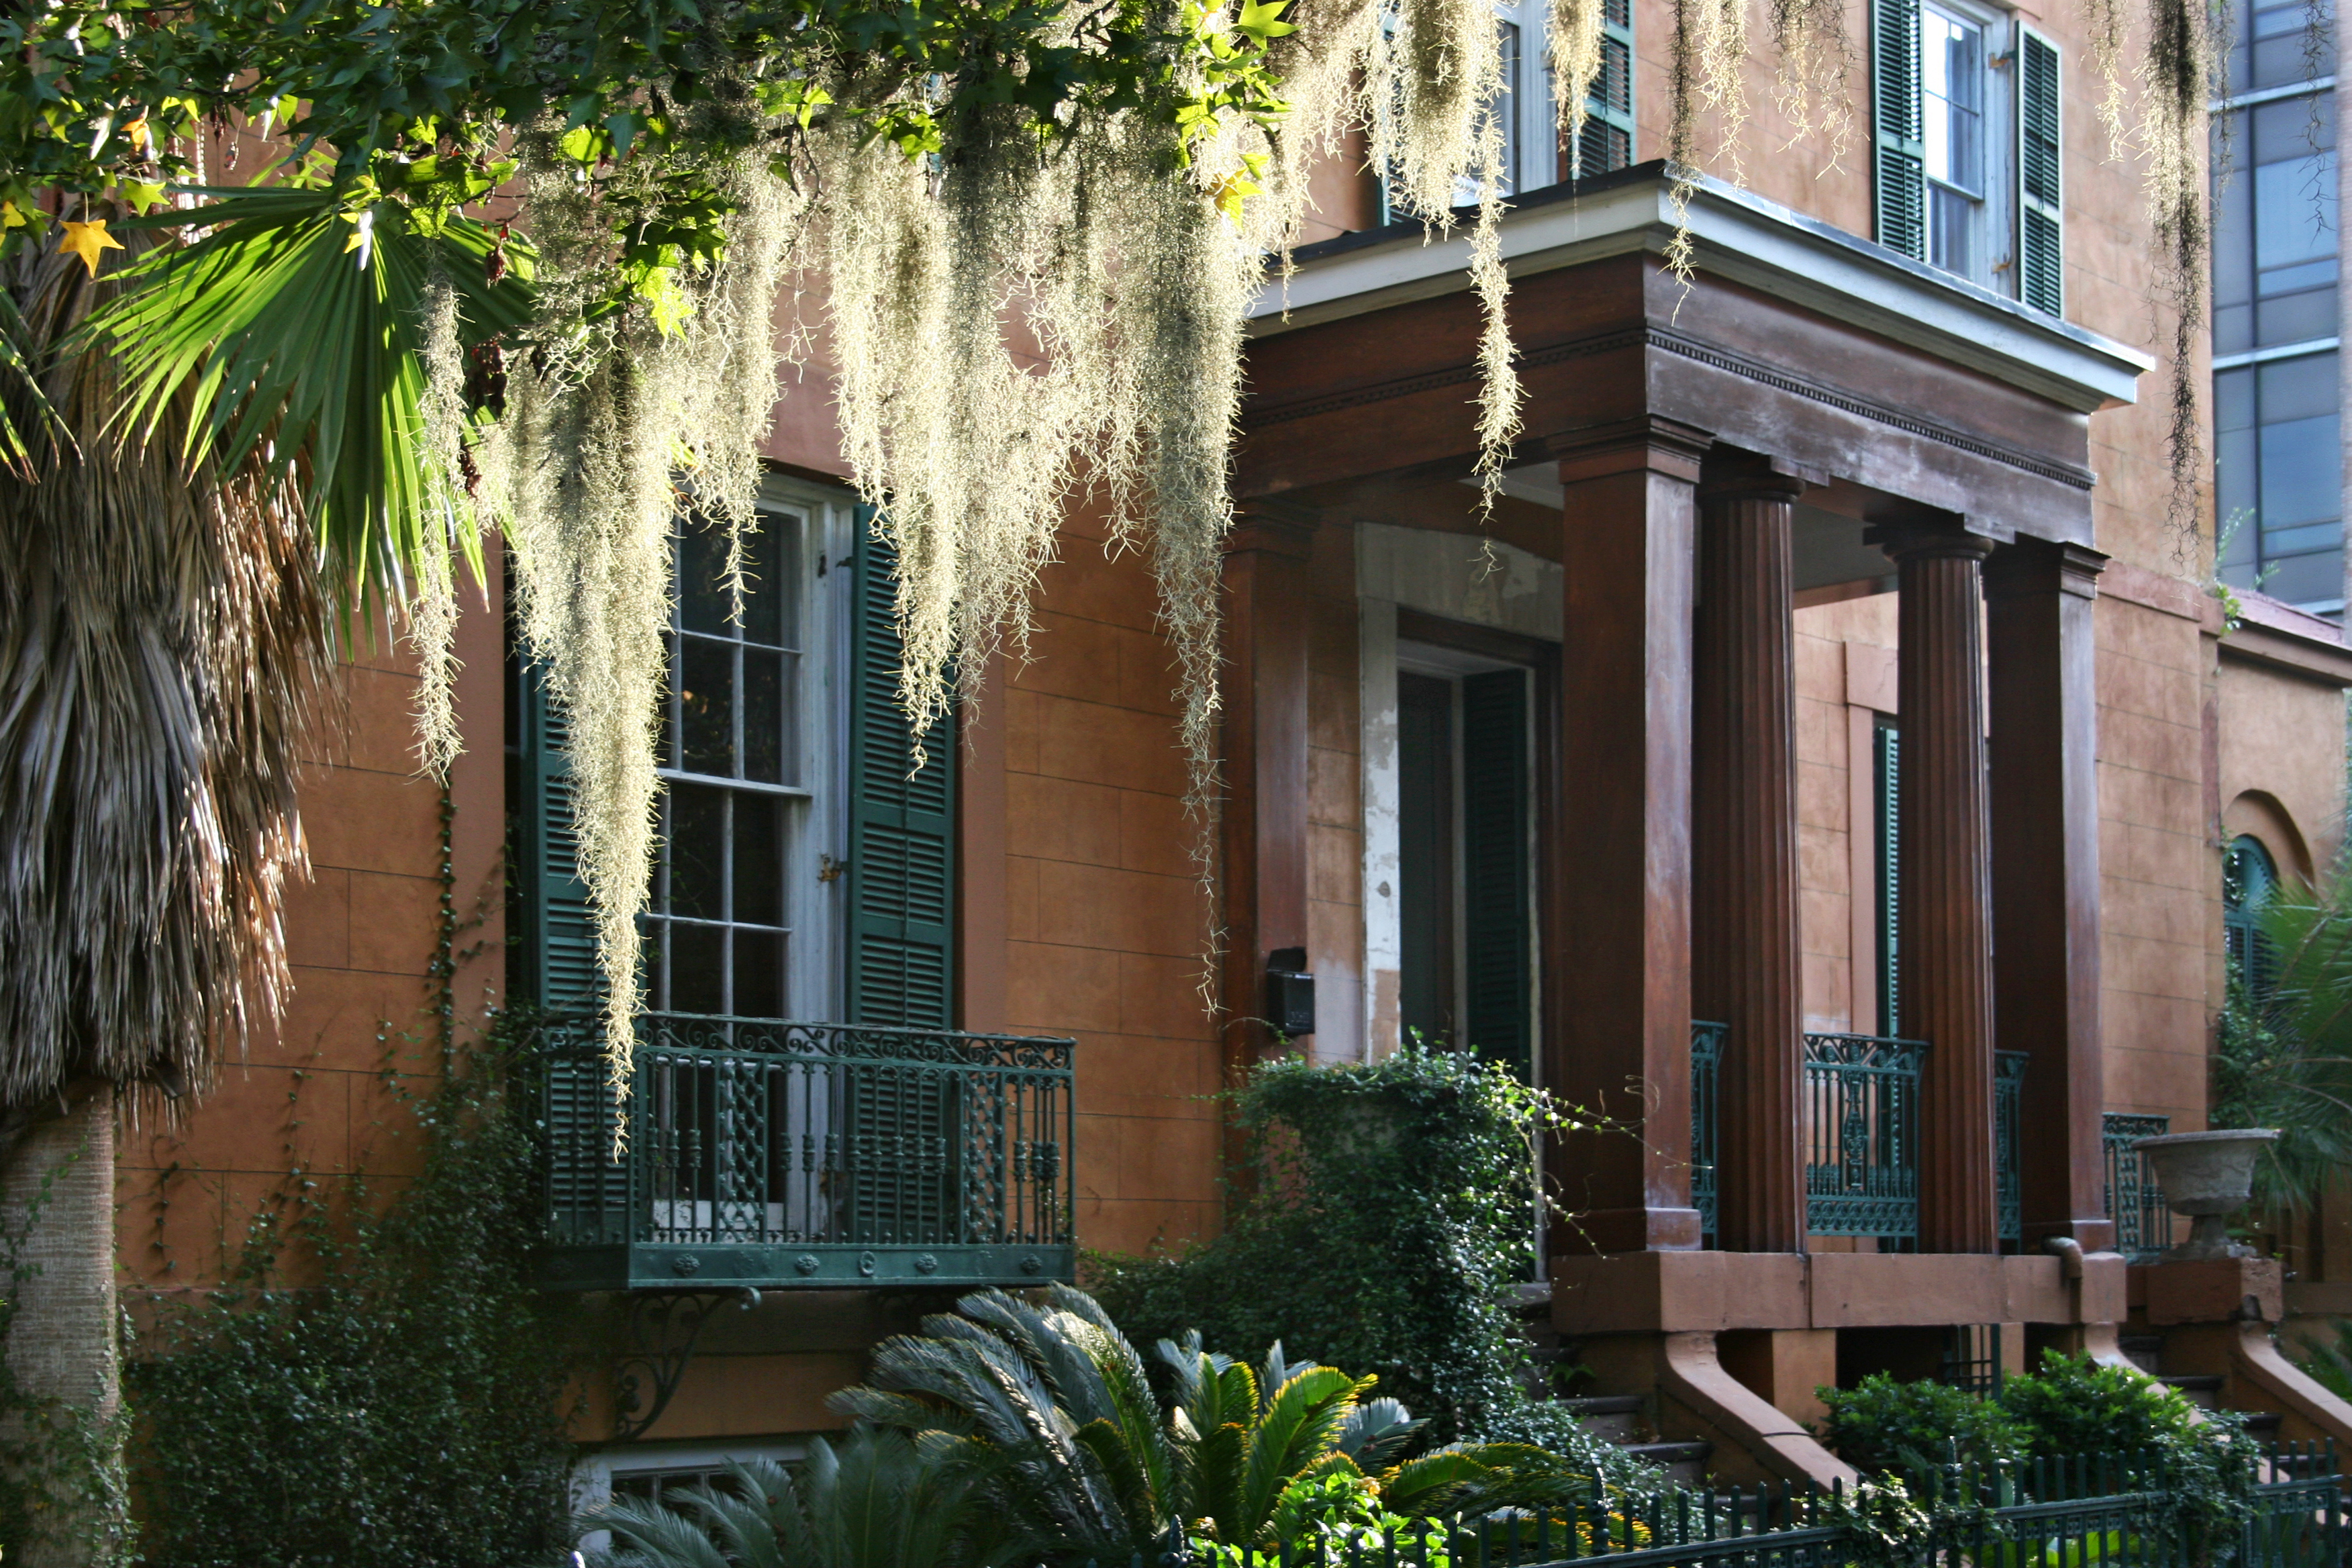 American Craftsman Renovations Offers Historic Renovations in Savannah GA 912-481-8353